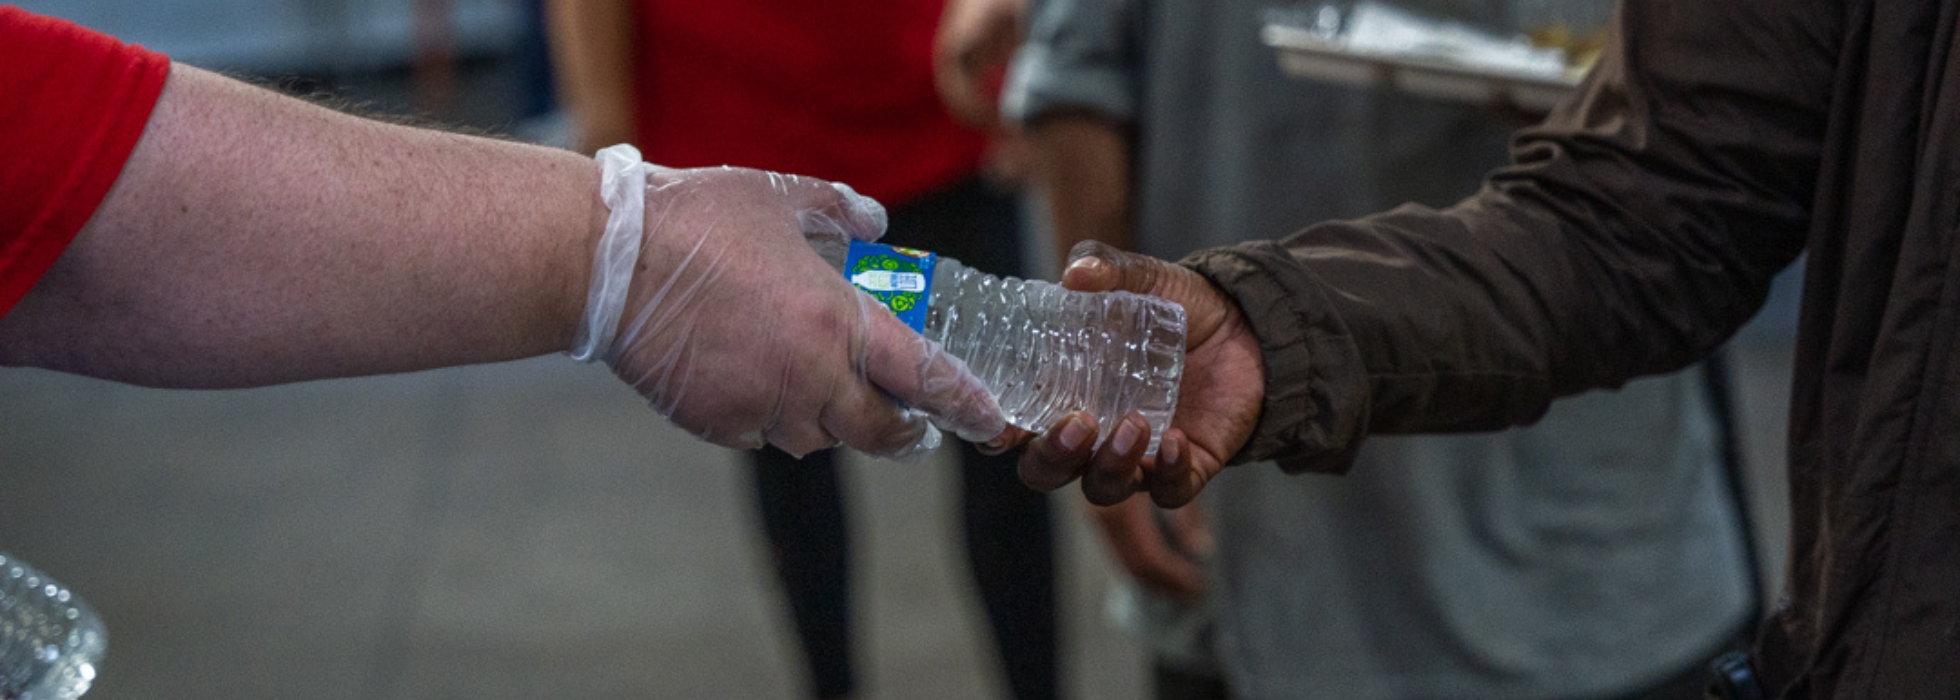 Volunteer handing a water bottle to a guest